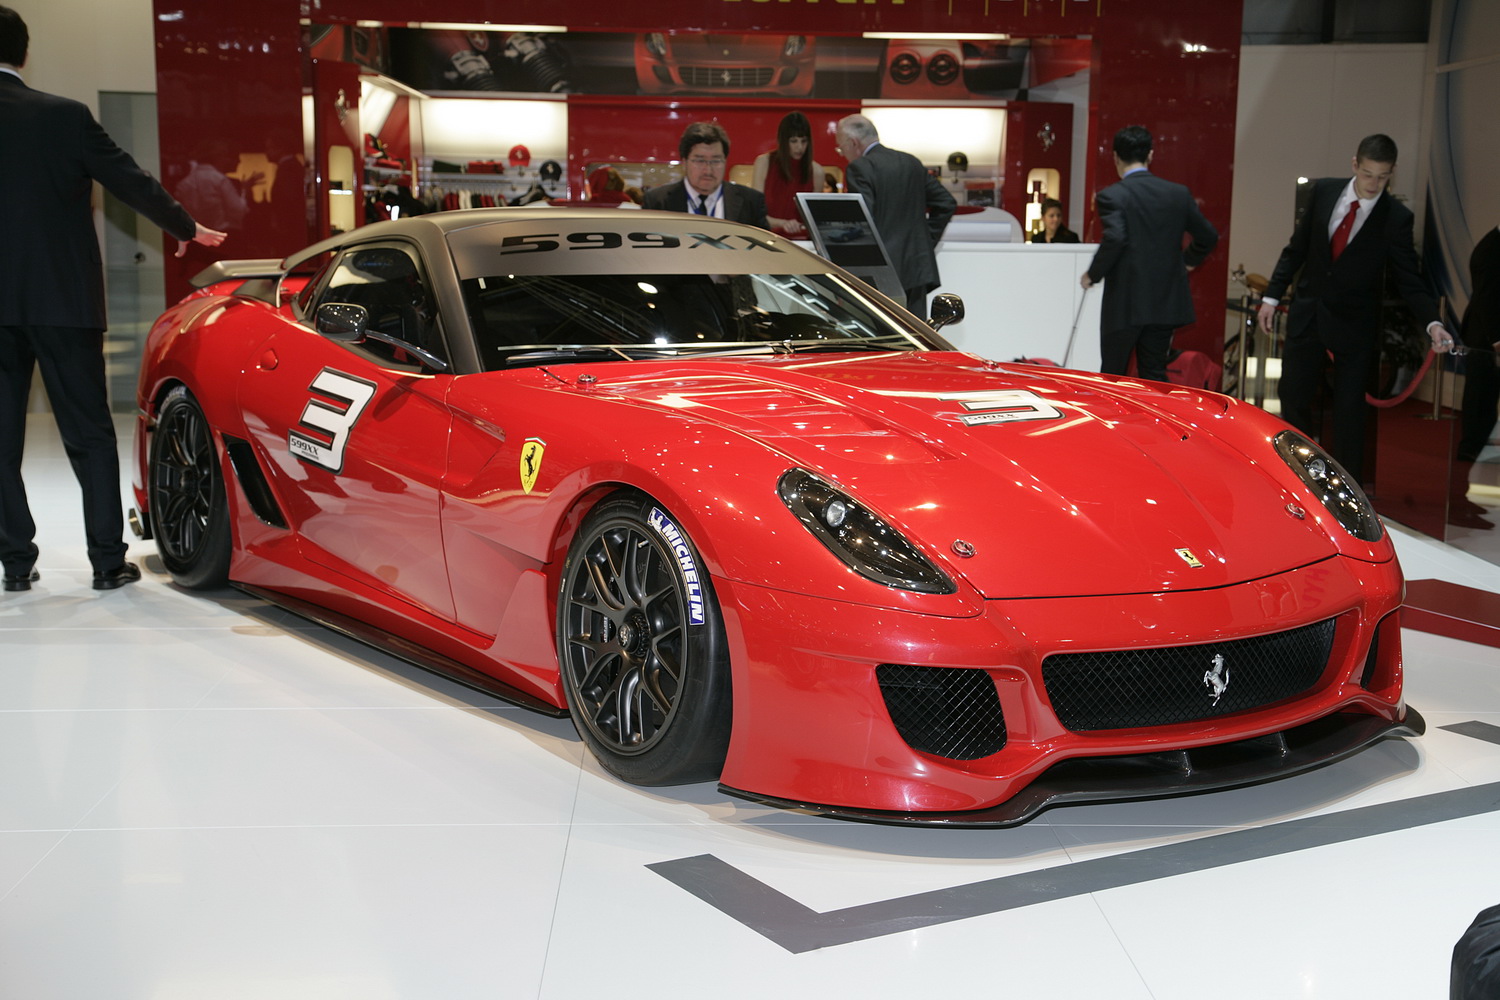 SPORT CARS 2011: Ferrari 599XX: New Track-Focused Version with 700HP V12